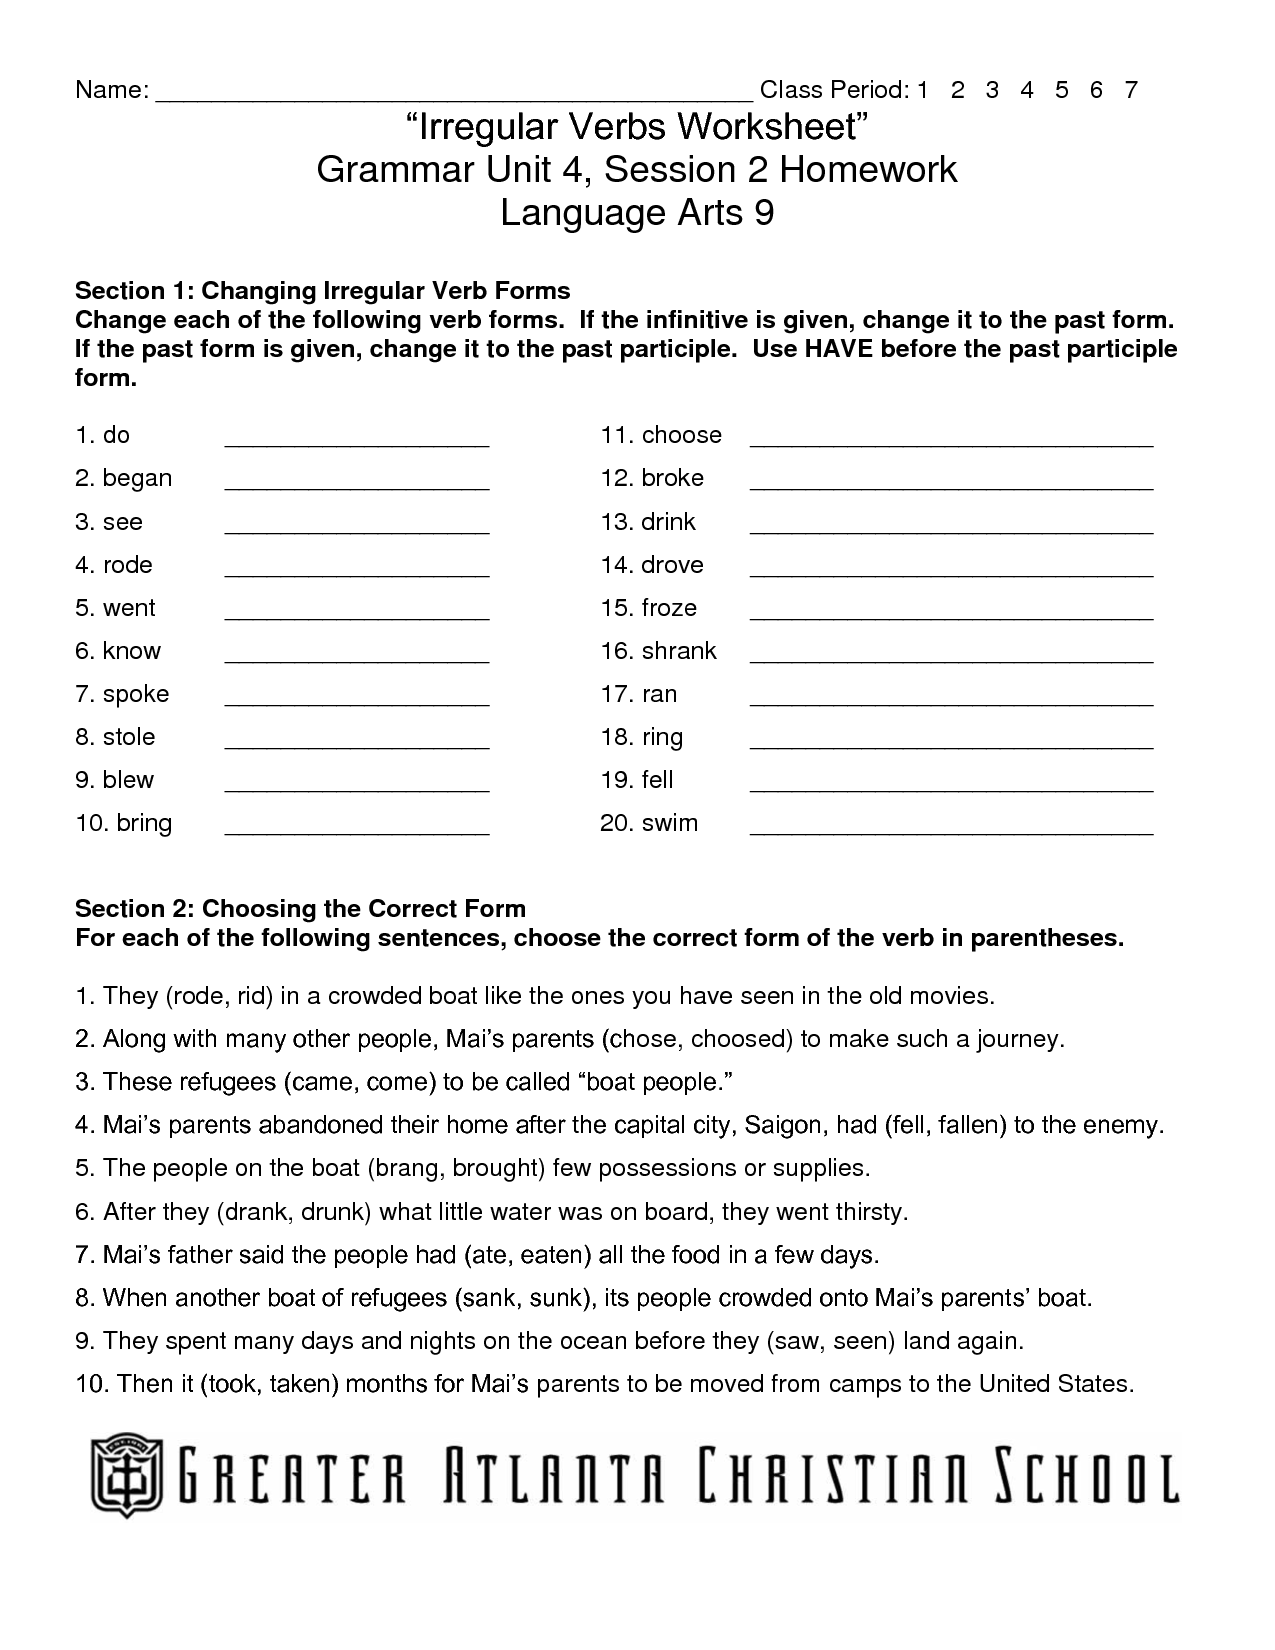 Irregular Verbs Worksheets For 1st Grade